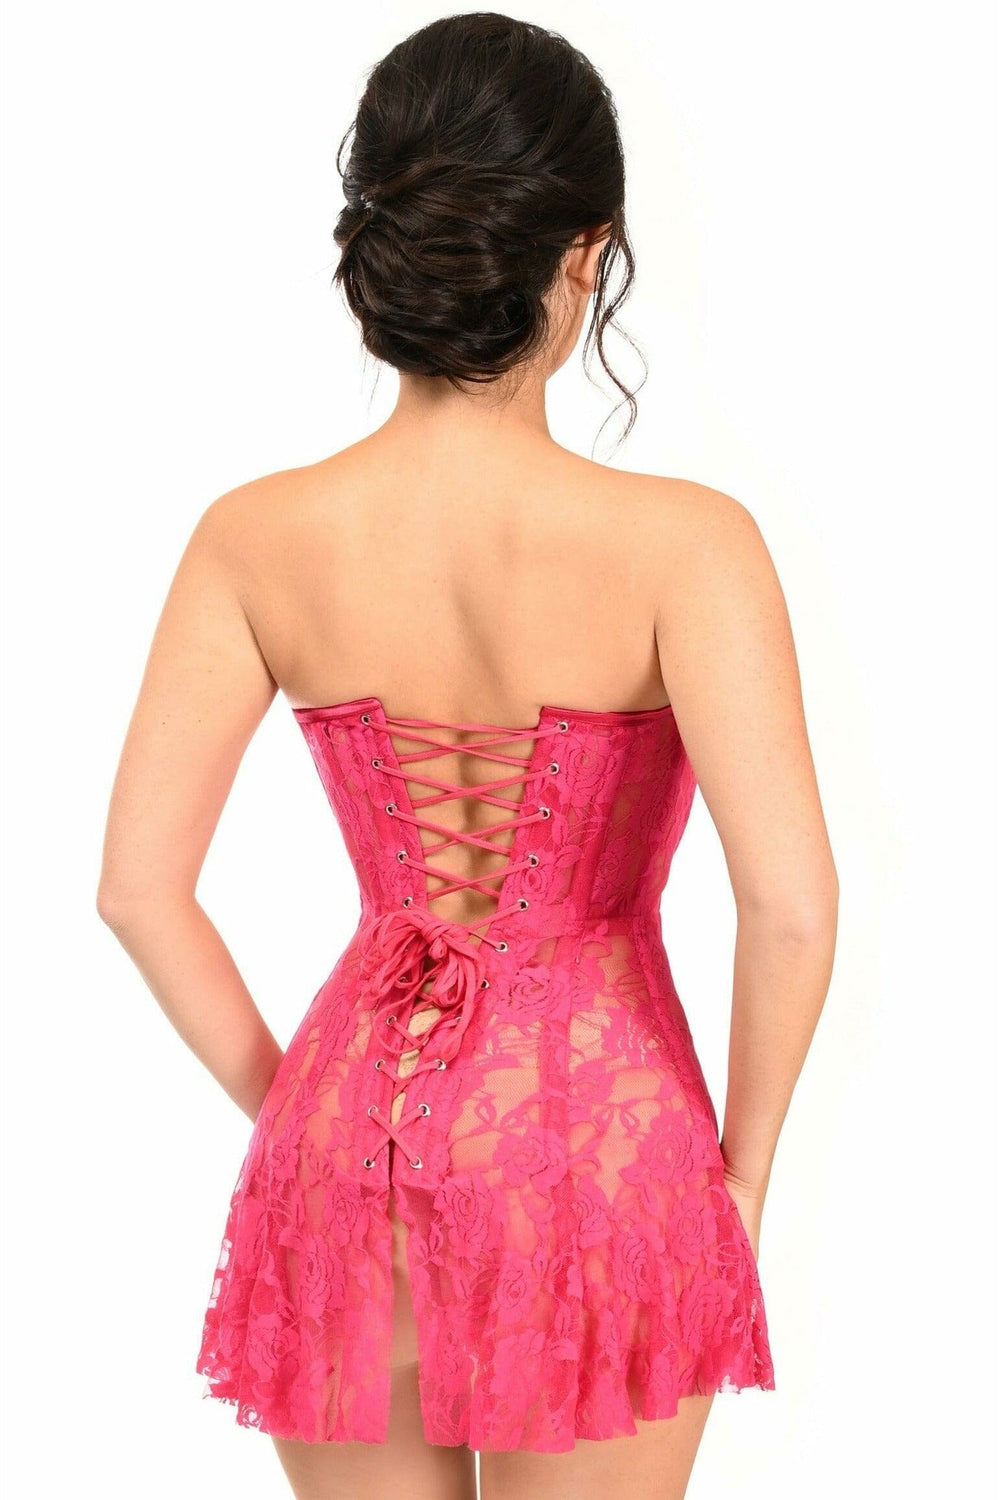 Lavish Fuchsia Sheer Lace Corset Dress-Corset Dresses-Daisy Corsets-SEXYSHOES.COM